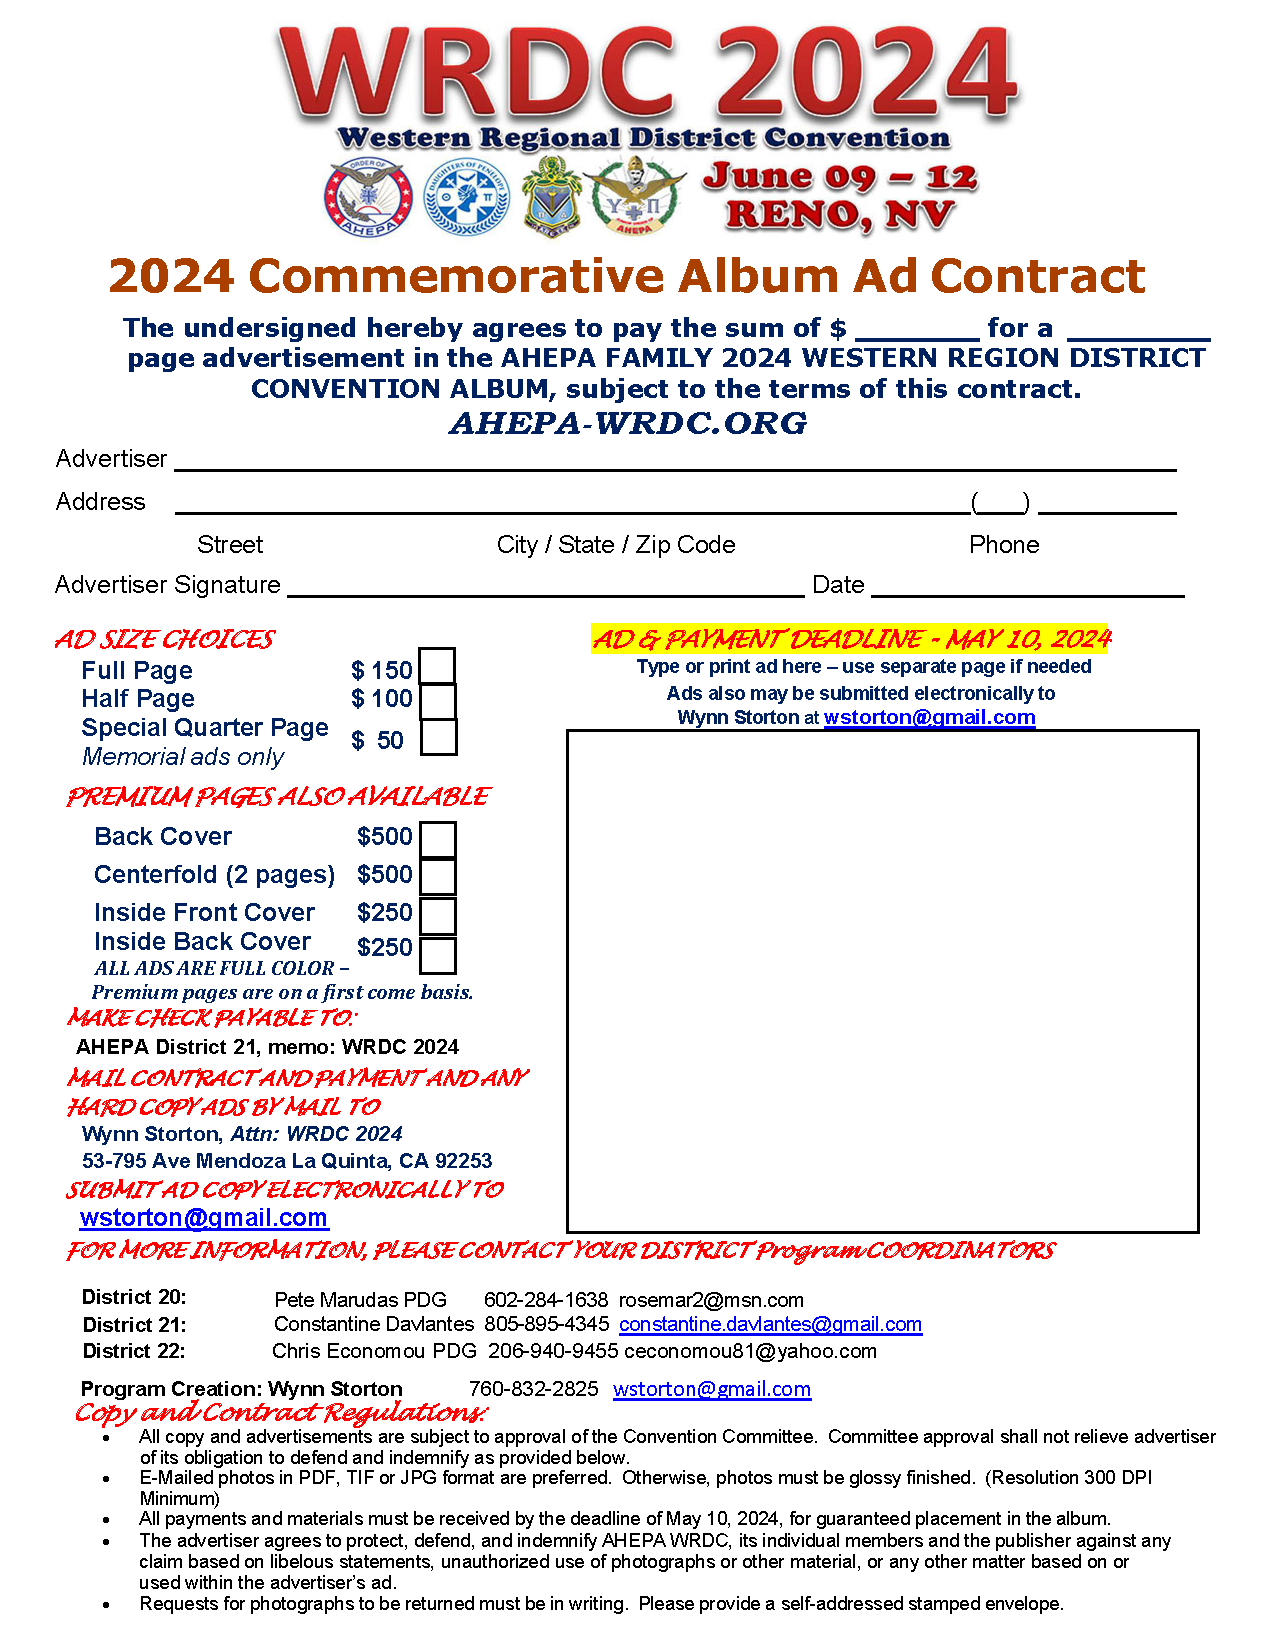 WRDC, AHEPA Western Regional District Convention